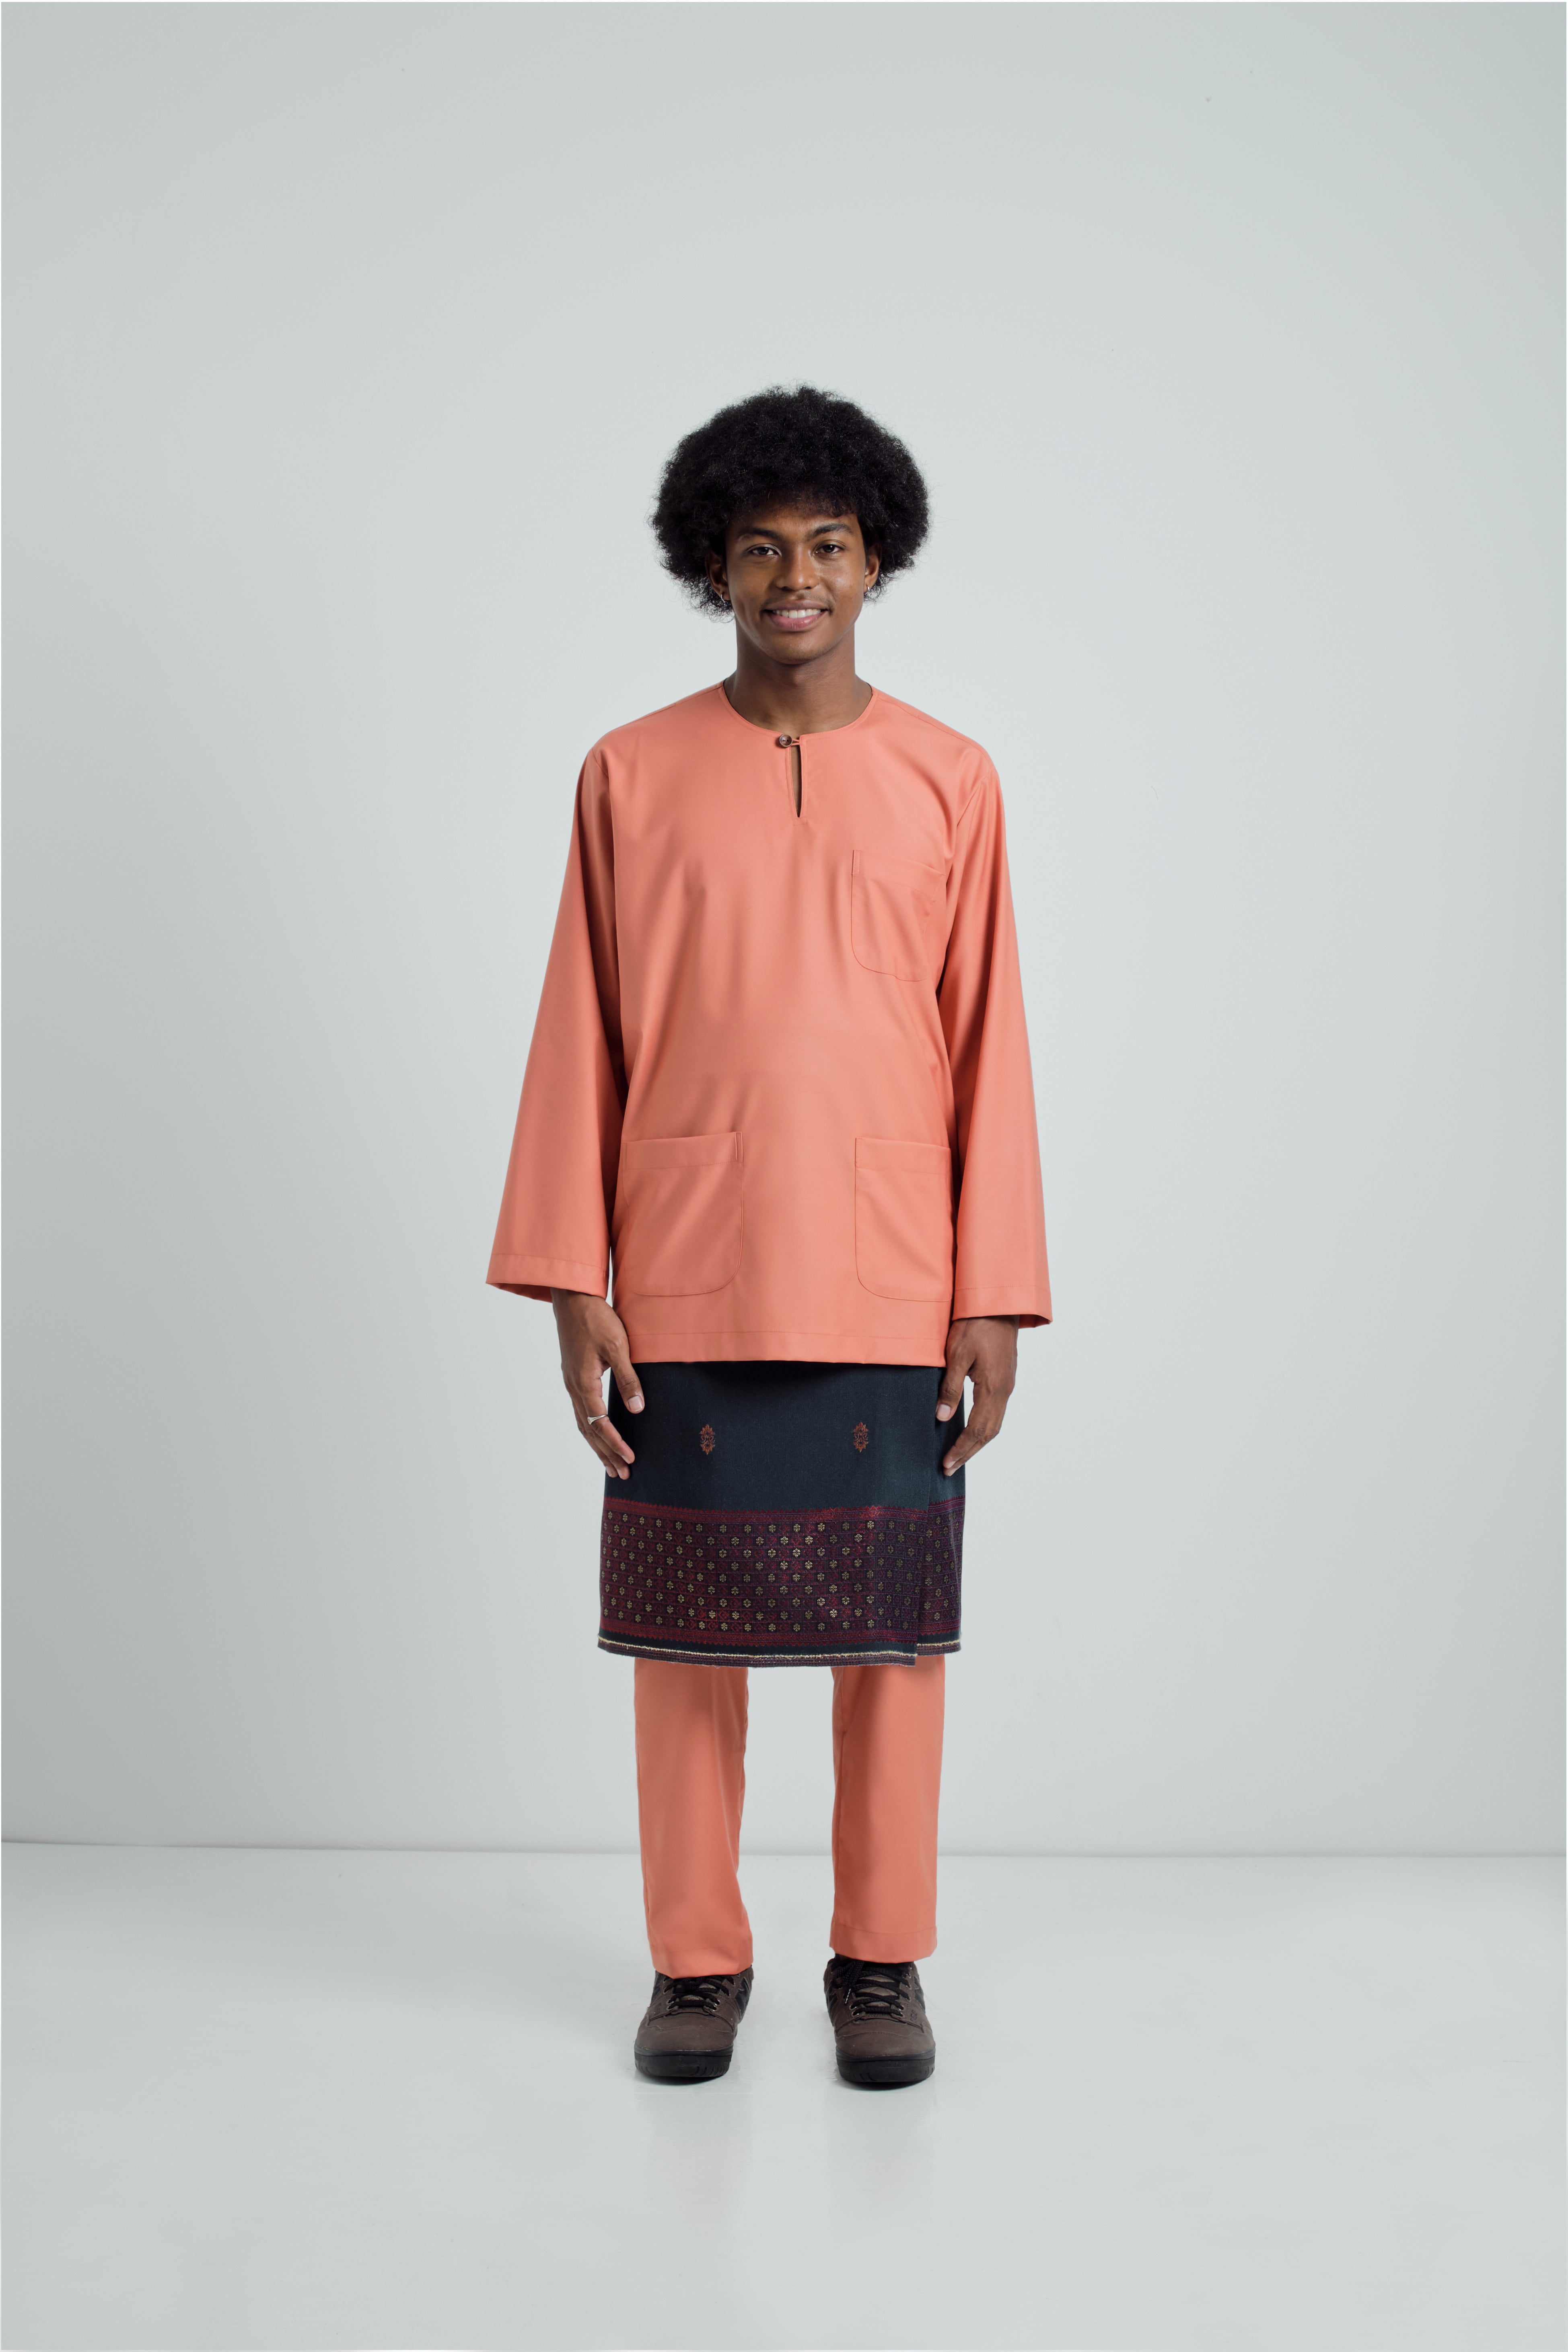 Patawali Classic Fit Baju Melayu Teluk Belanga - Pumpkin